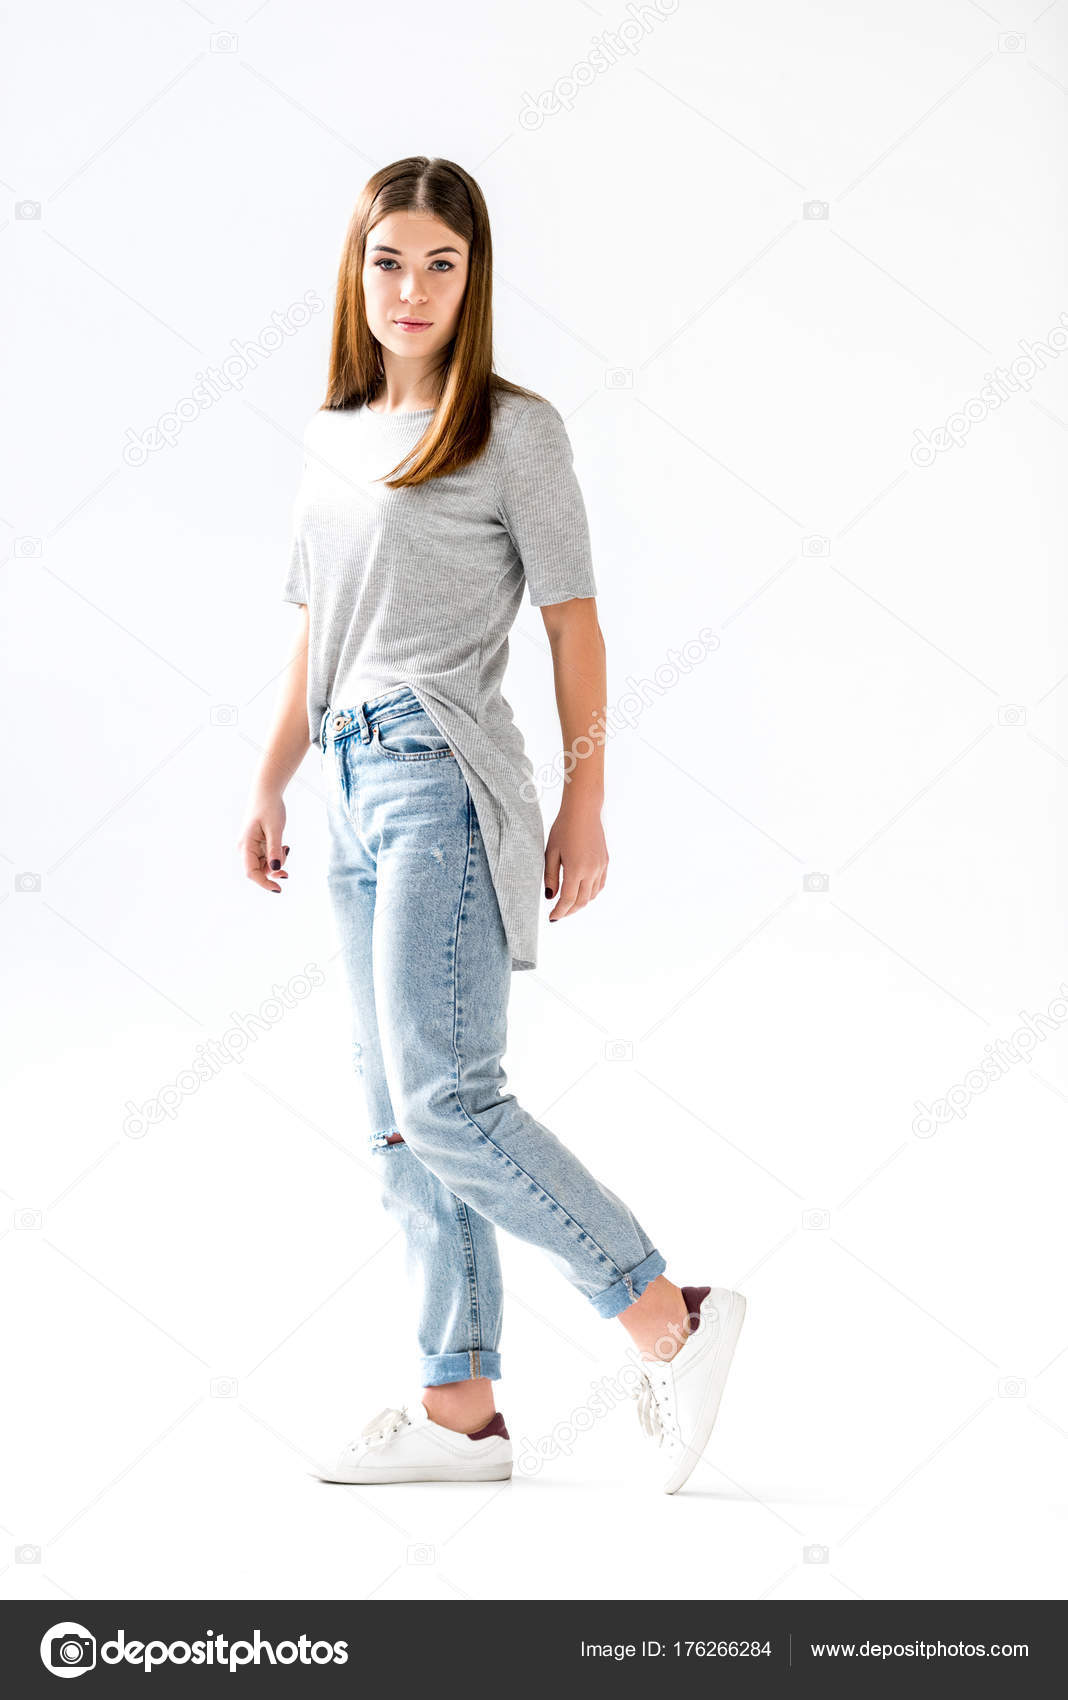 grey t shirt jeans